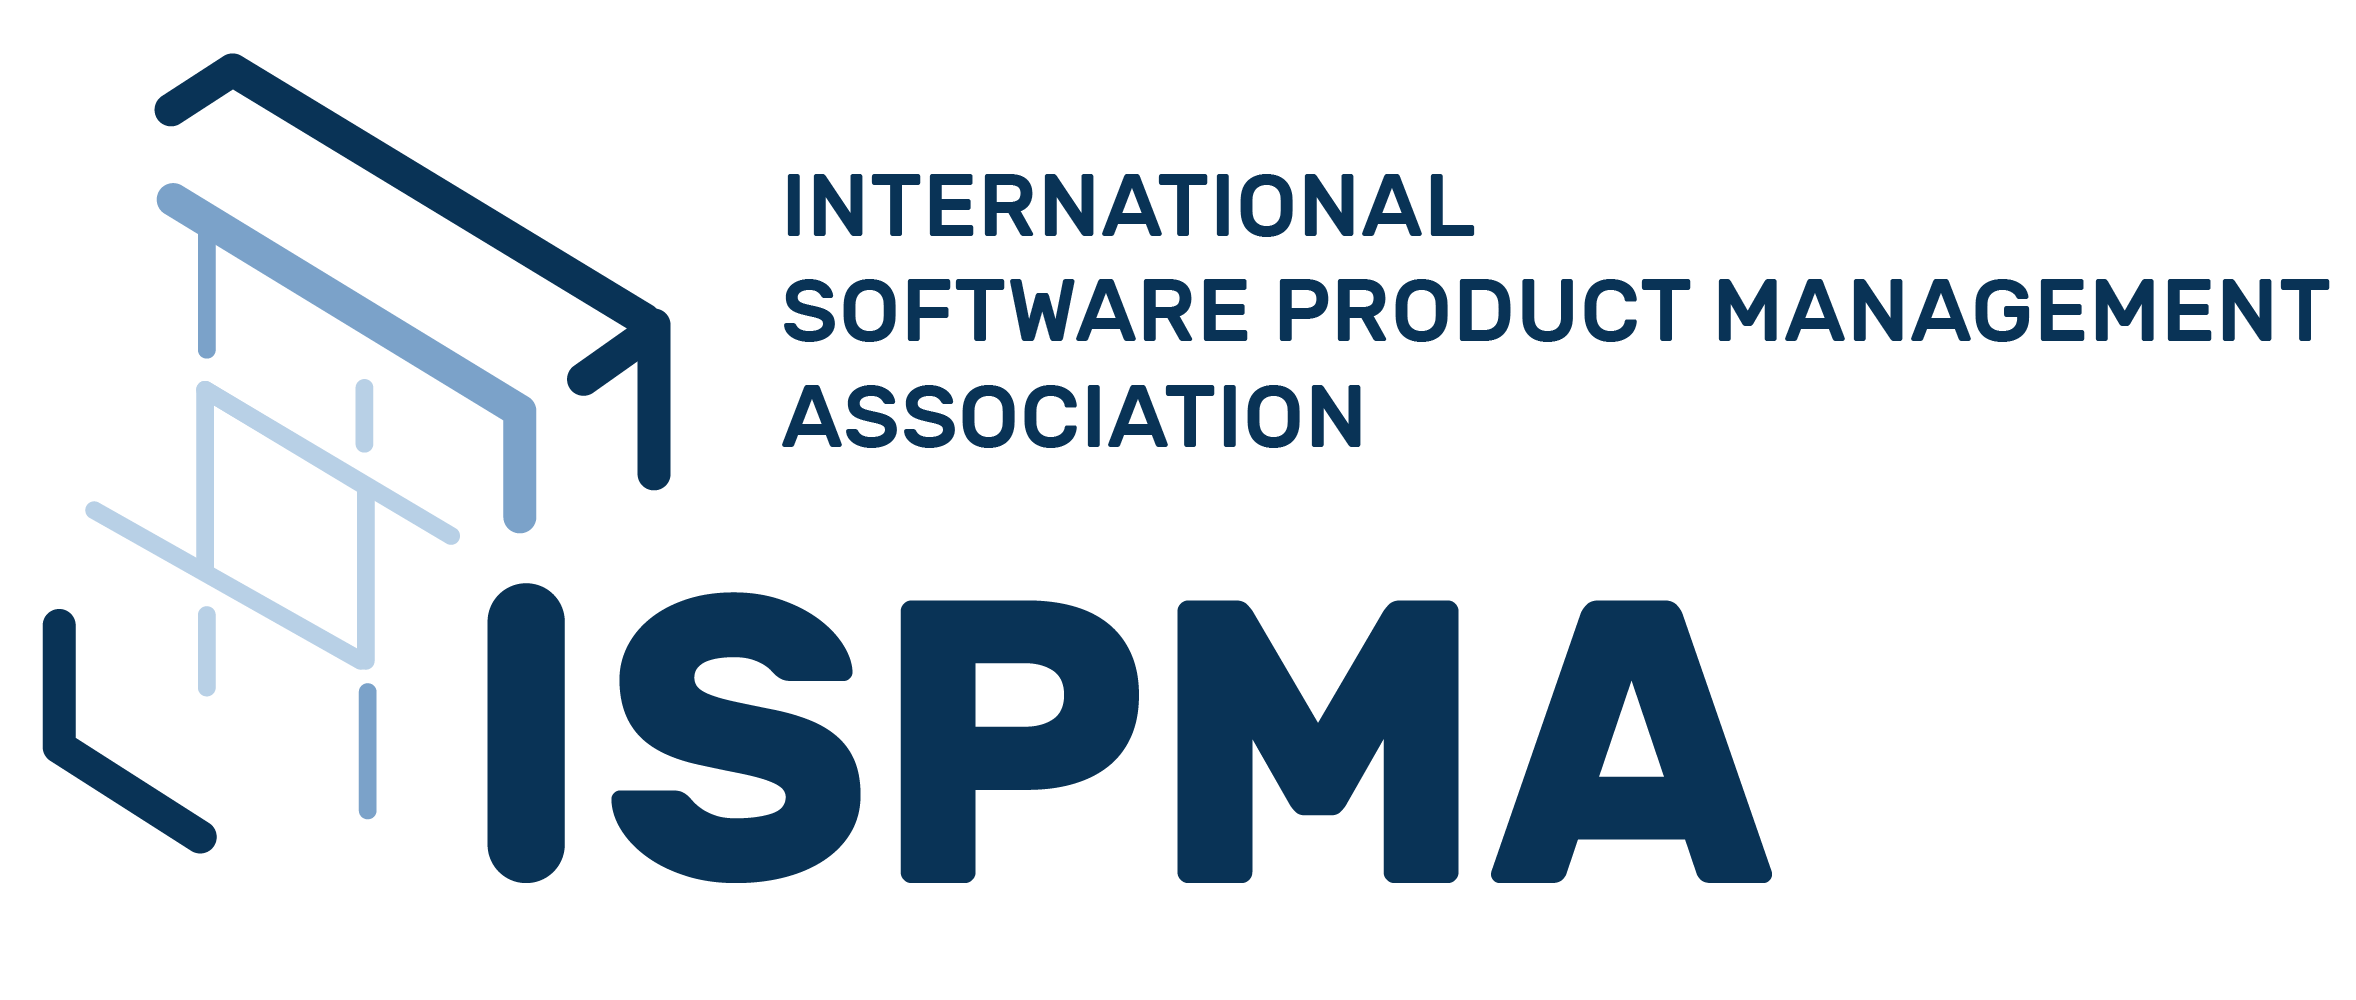 ISPMA-logo